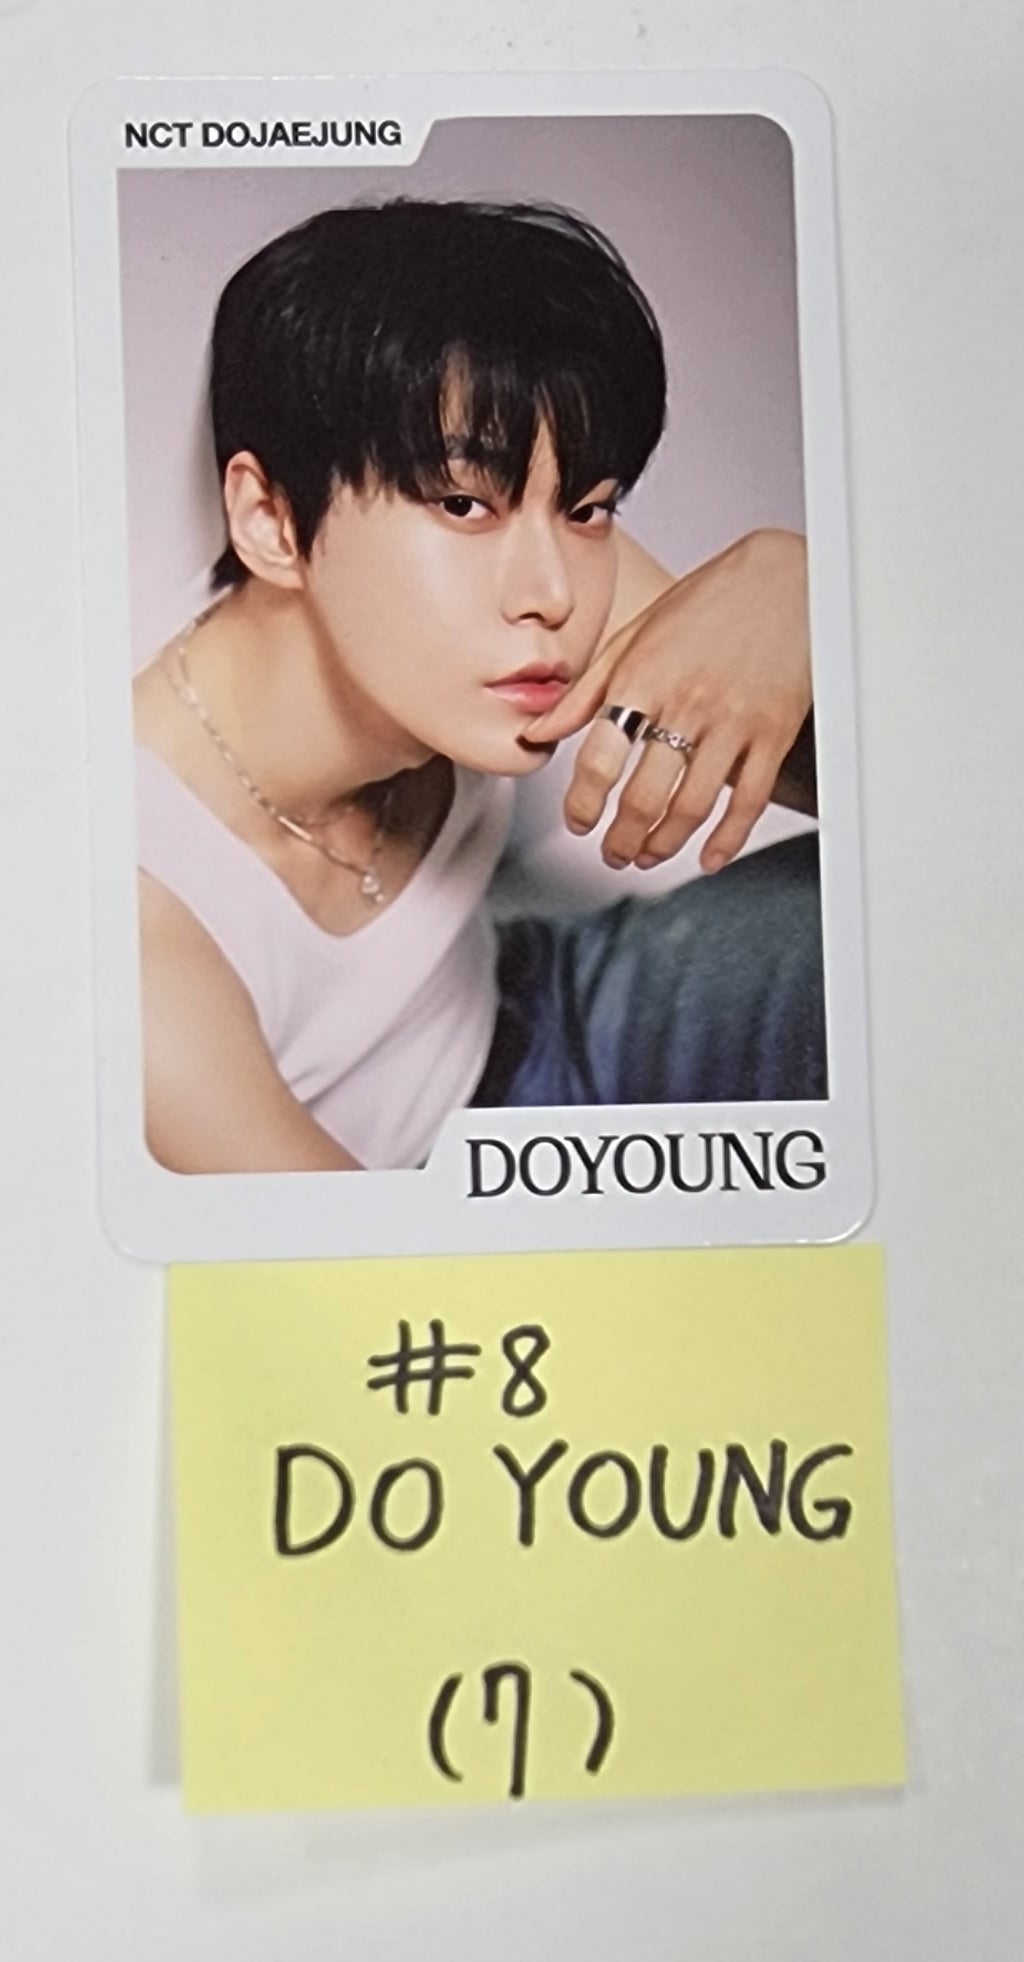 NCT DOJAEJUNG "PERFUME" - Official Random Trading Photocard (Restocked 7/7)